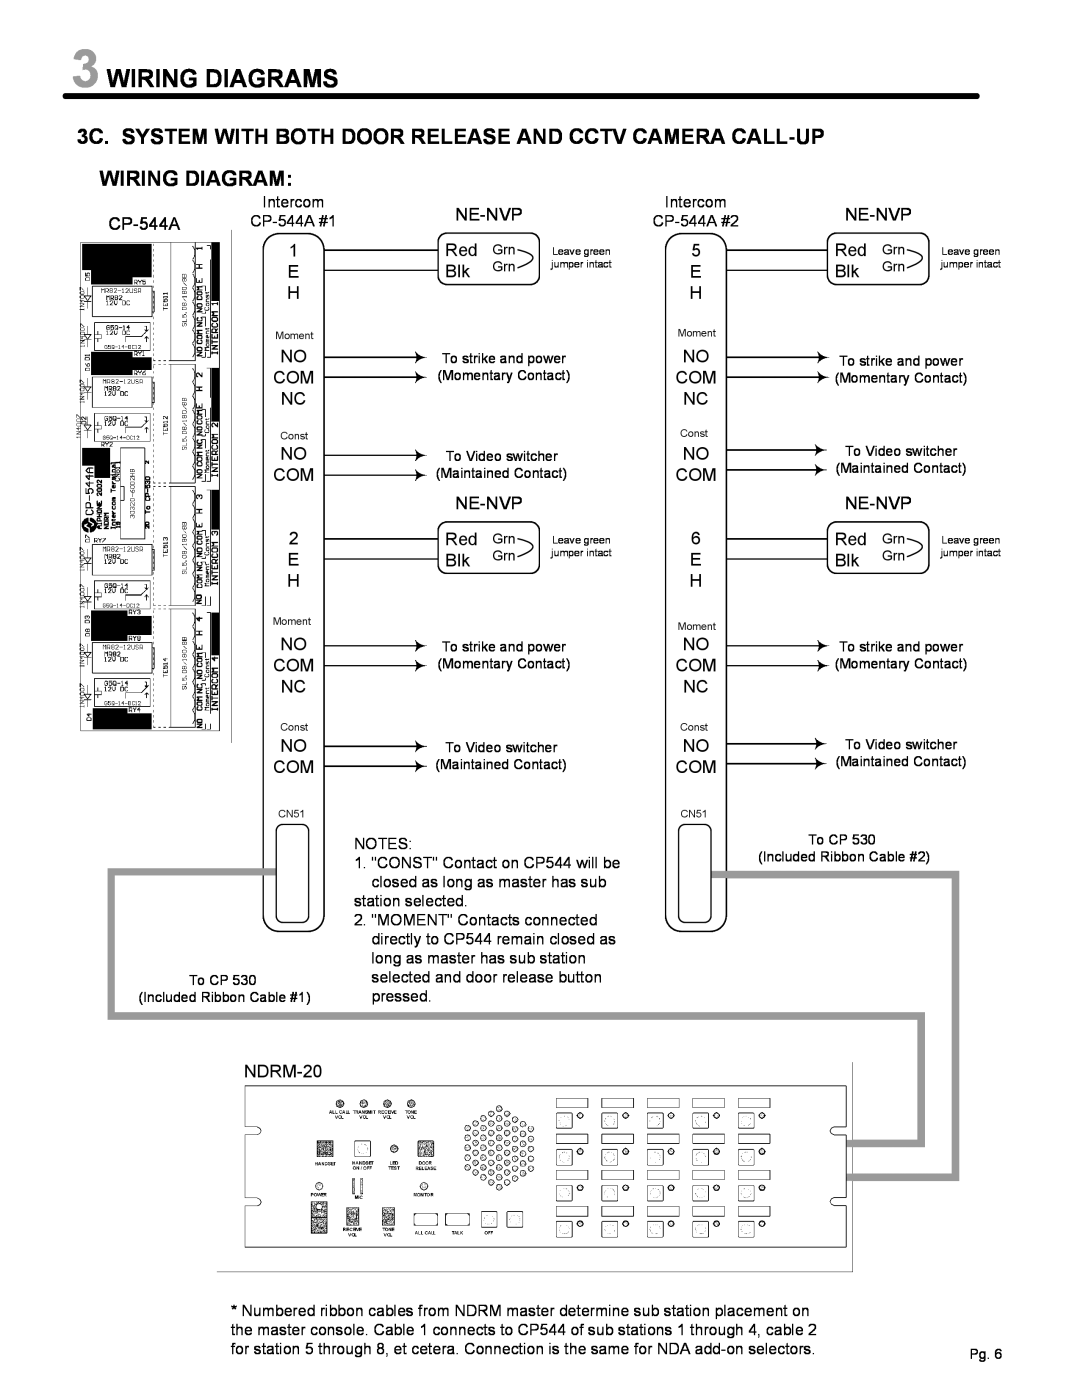 Aiphone NDRM manual Wiring Diagrams 